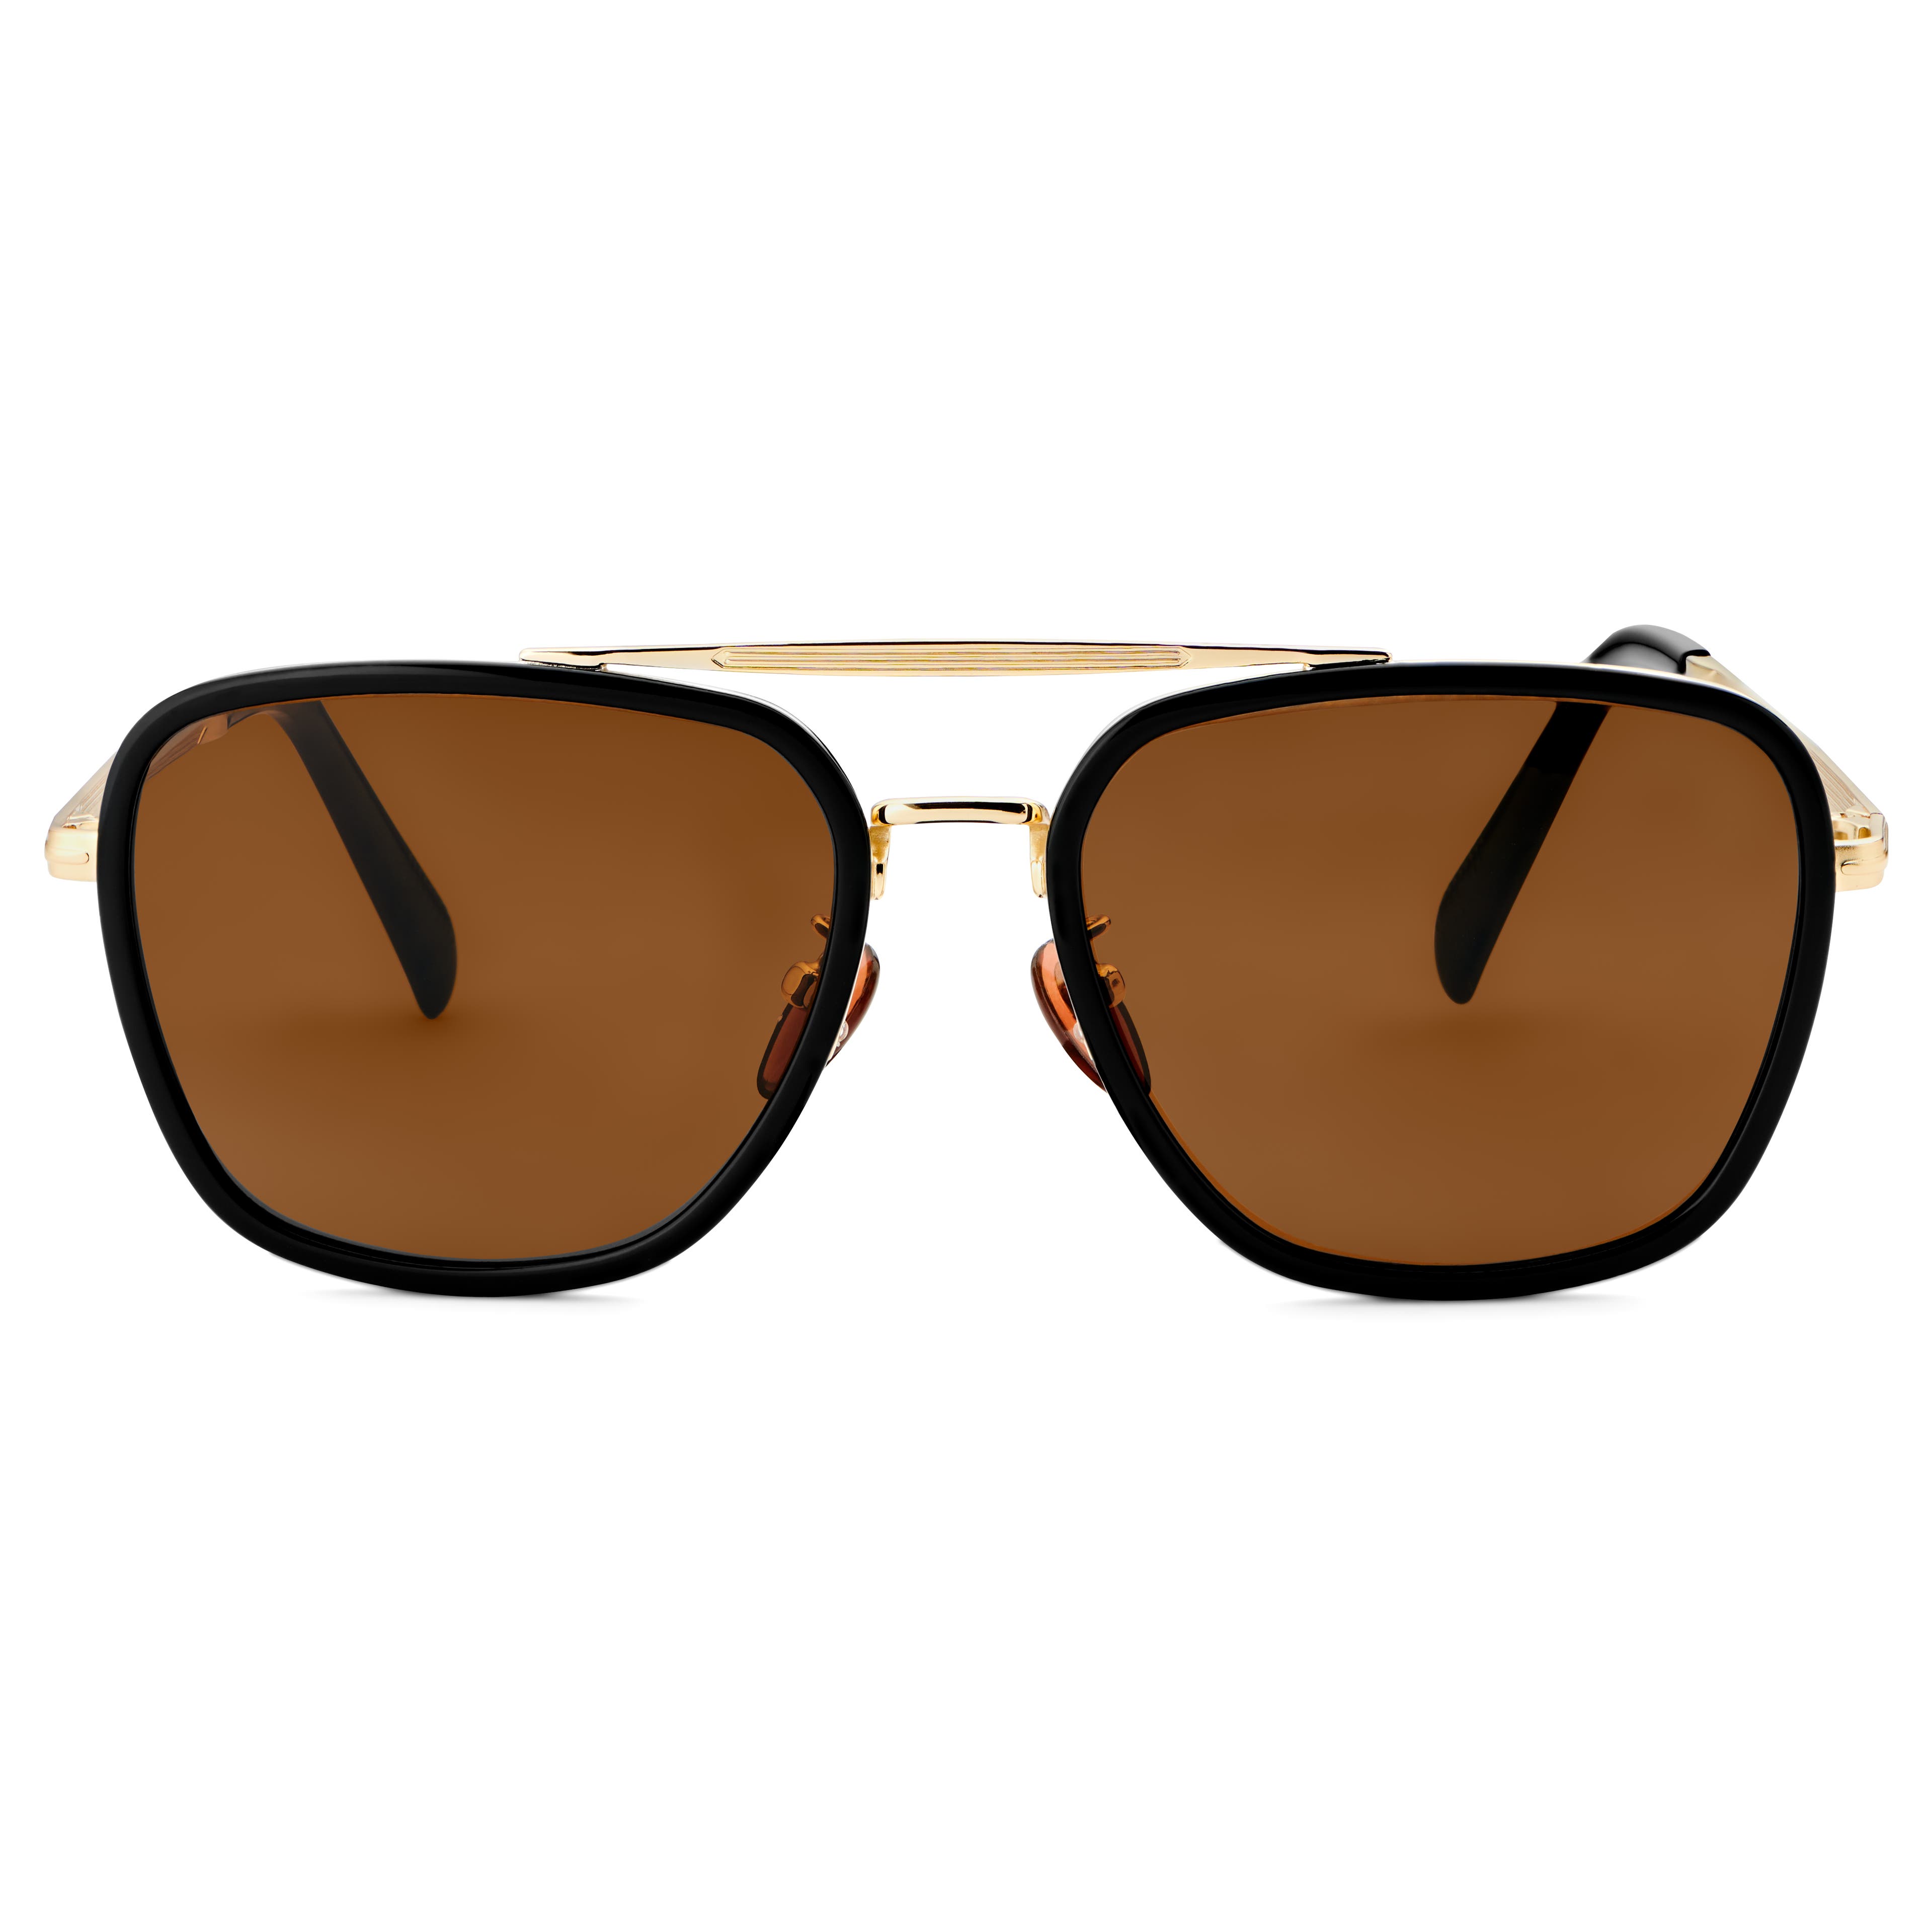 Black & Gold-Tone Stainless Steel Aviator Sunglasses